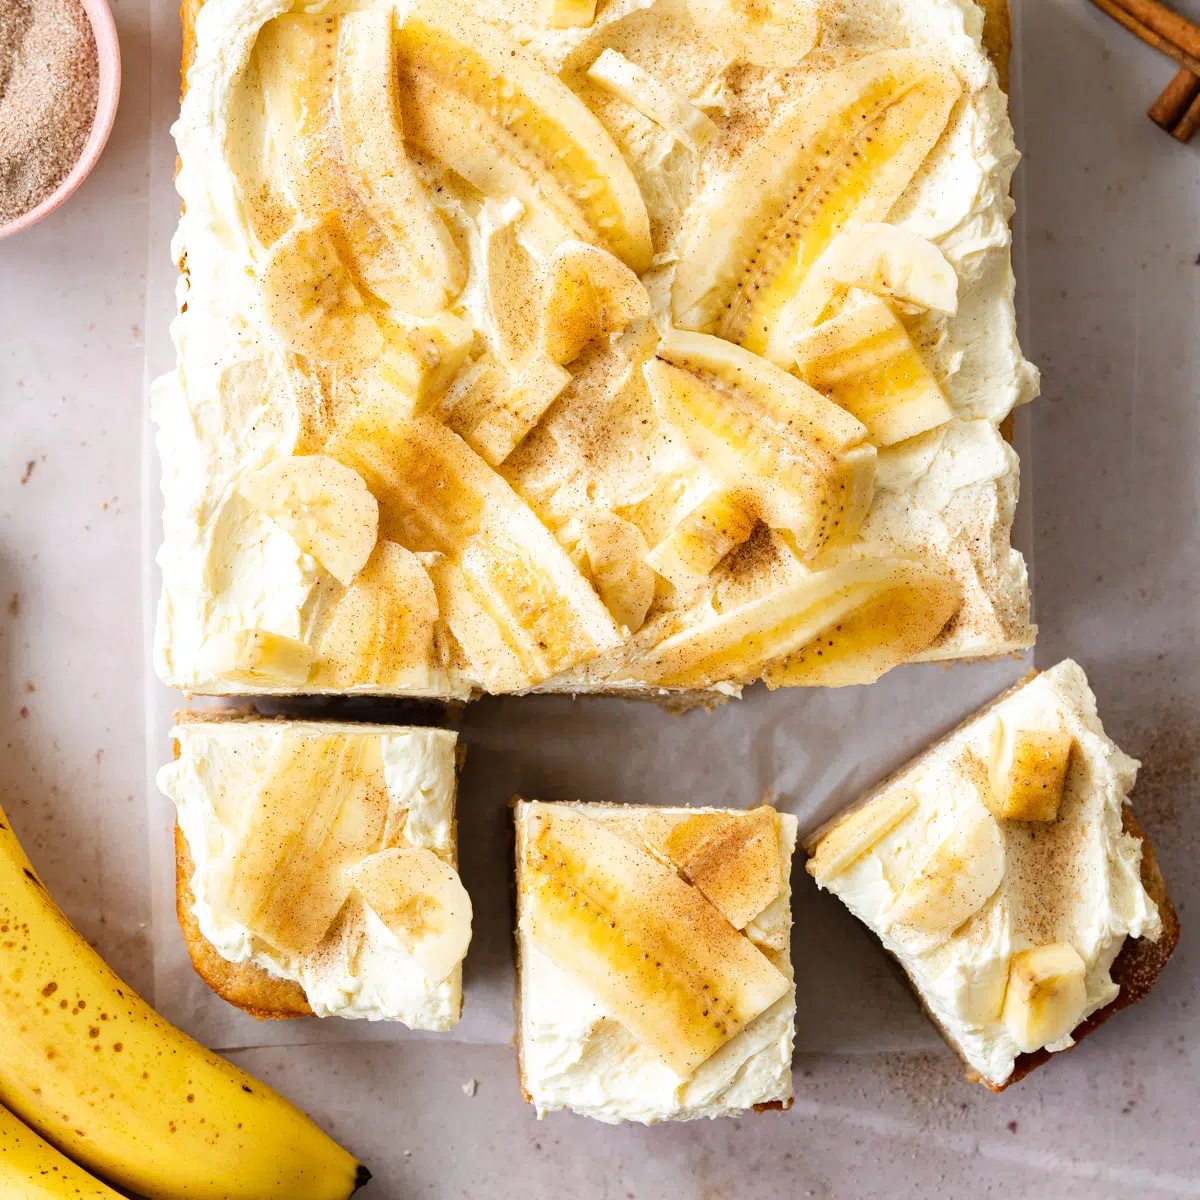 Vegan Banana Cake